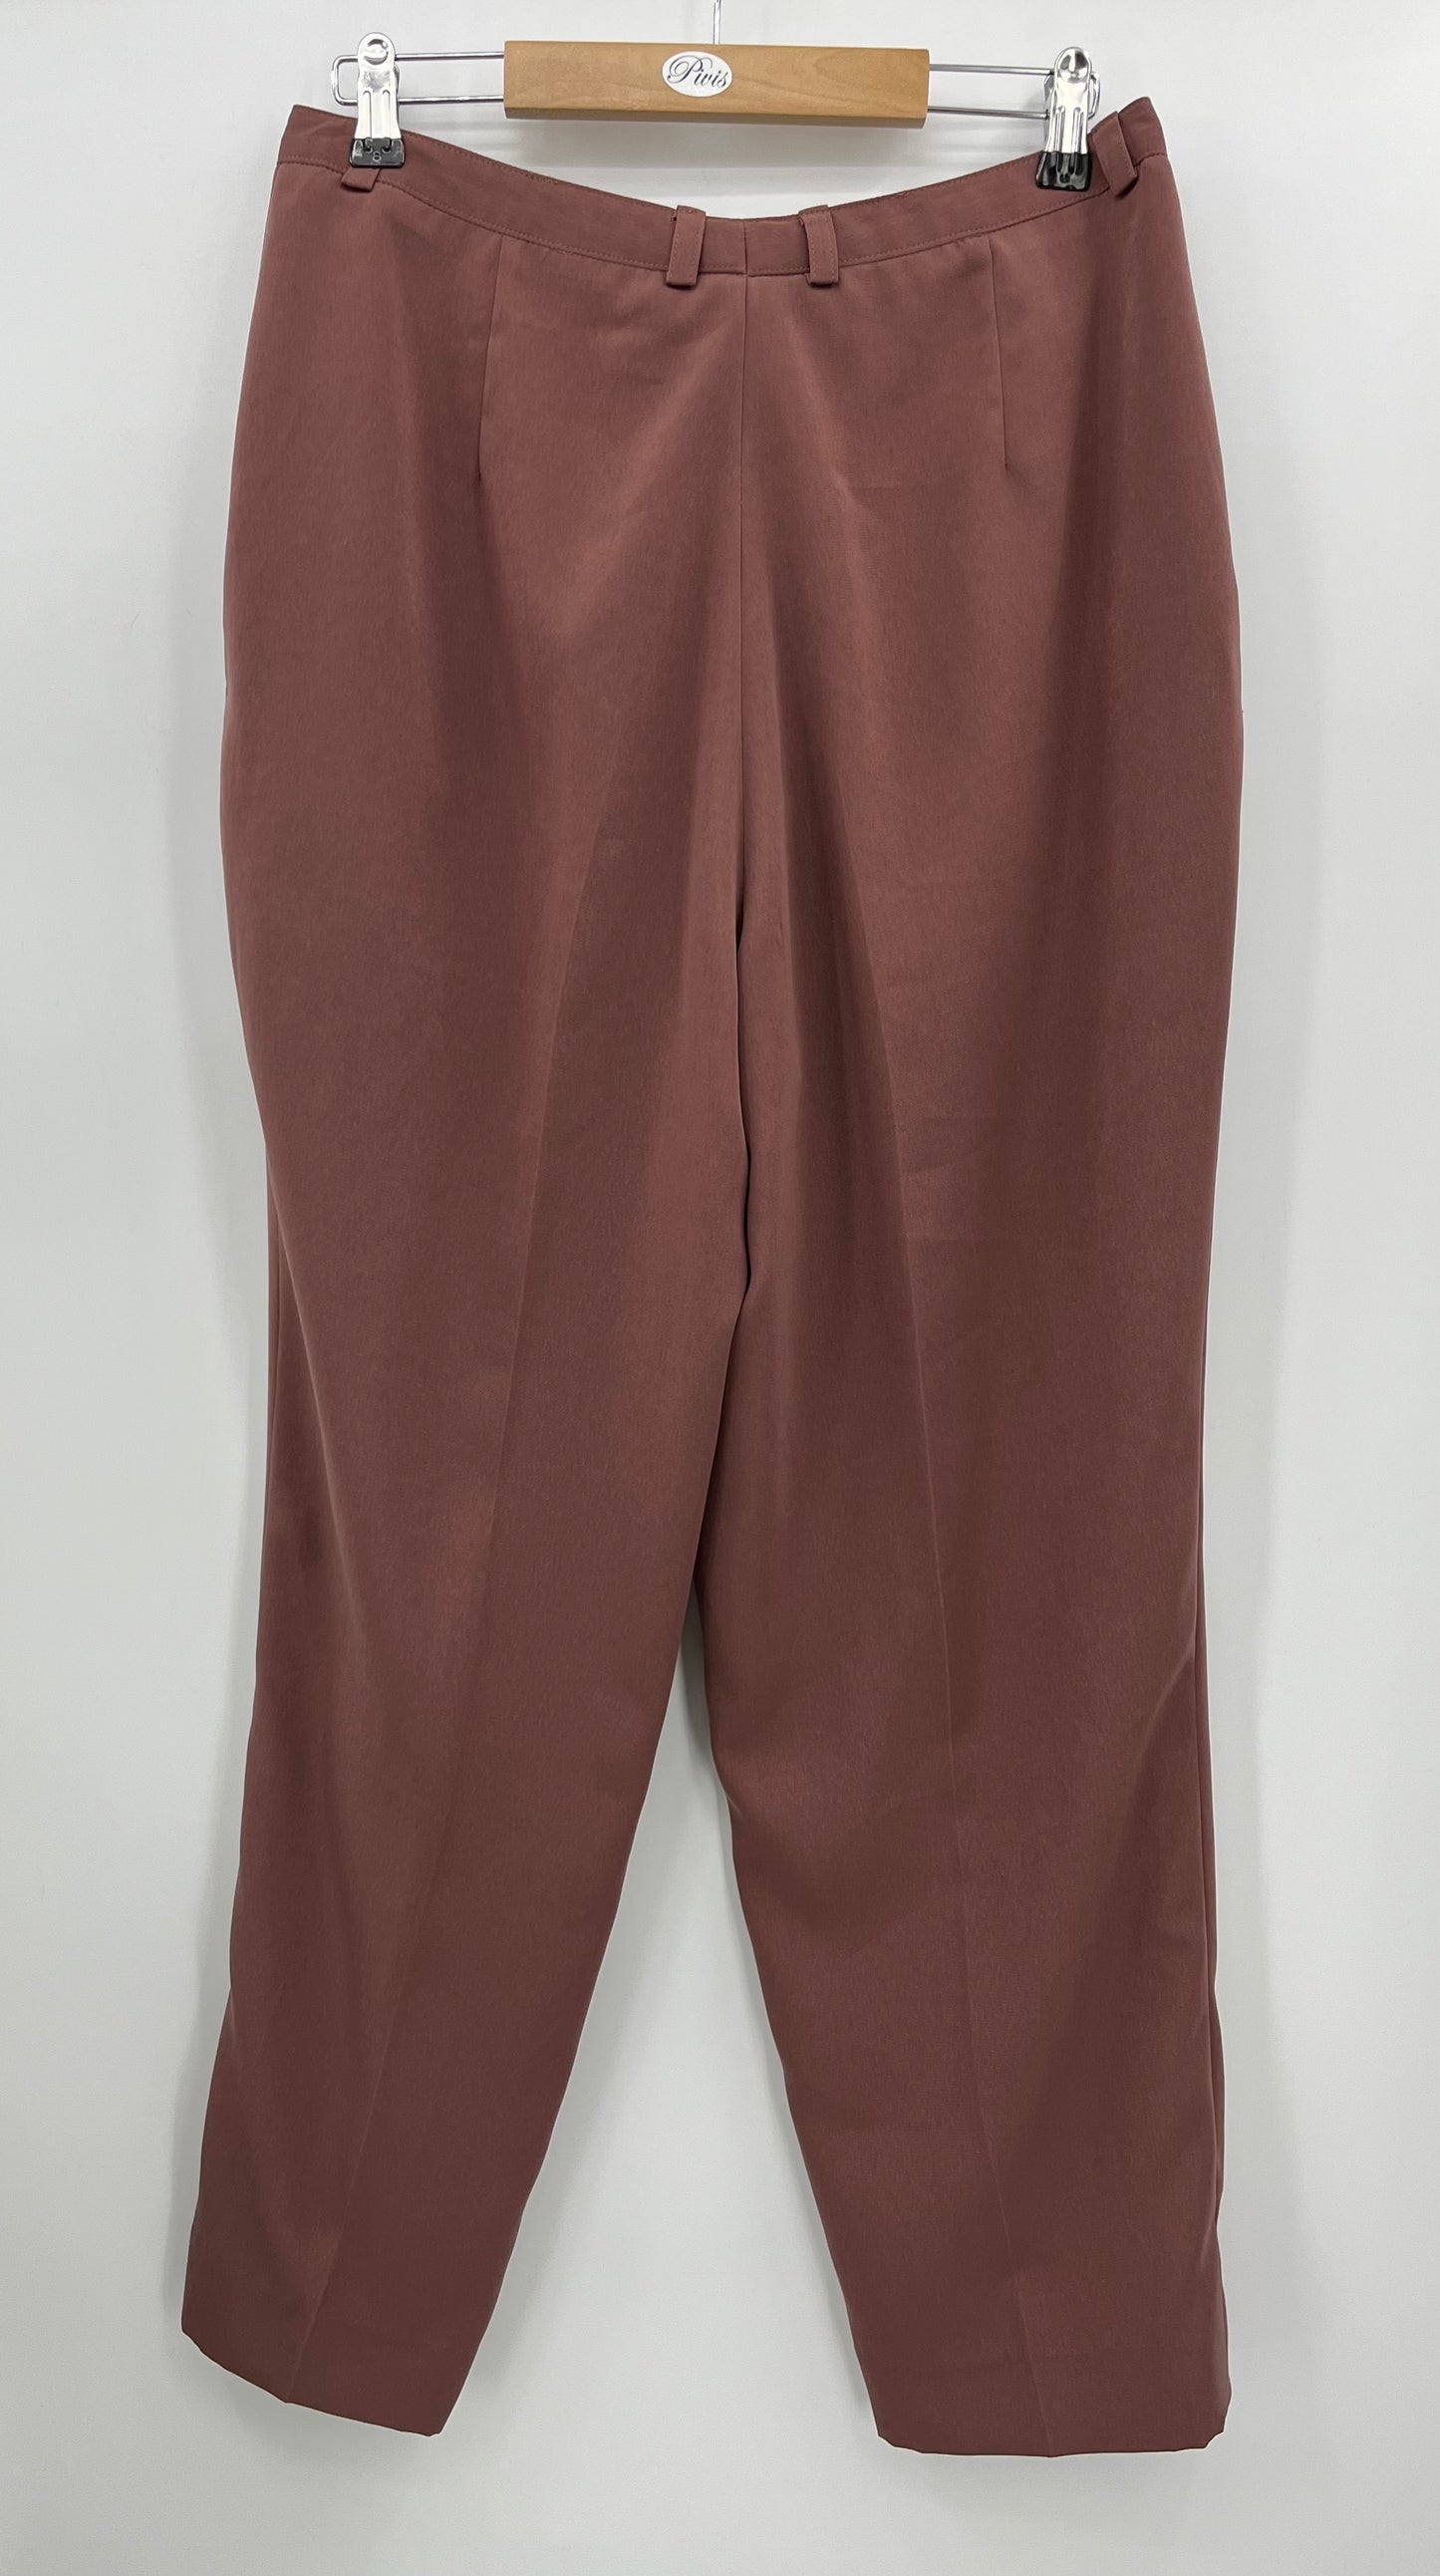 Vanhan roosan väriset miesten housut, 80-90-luku, vyöt.ymp. 82cm, kokoarvio S-M